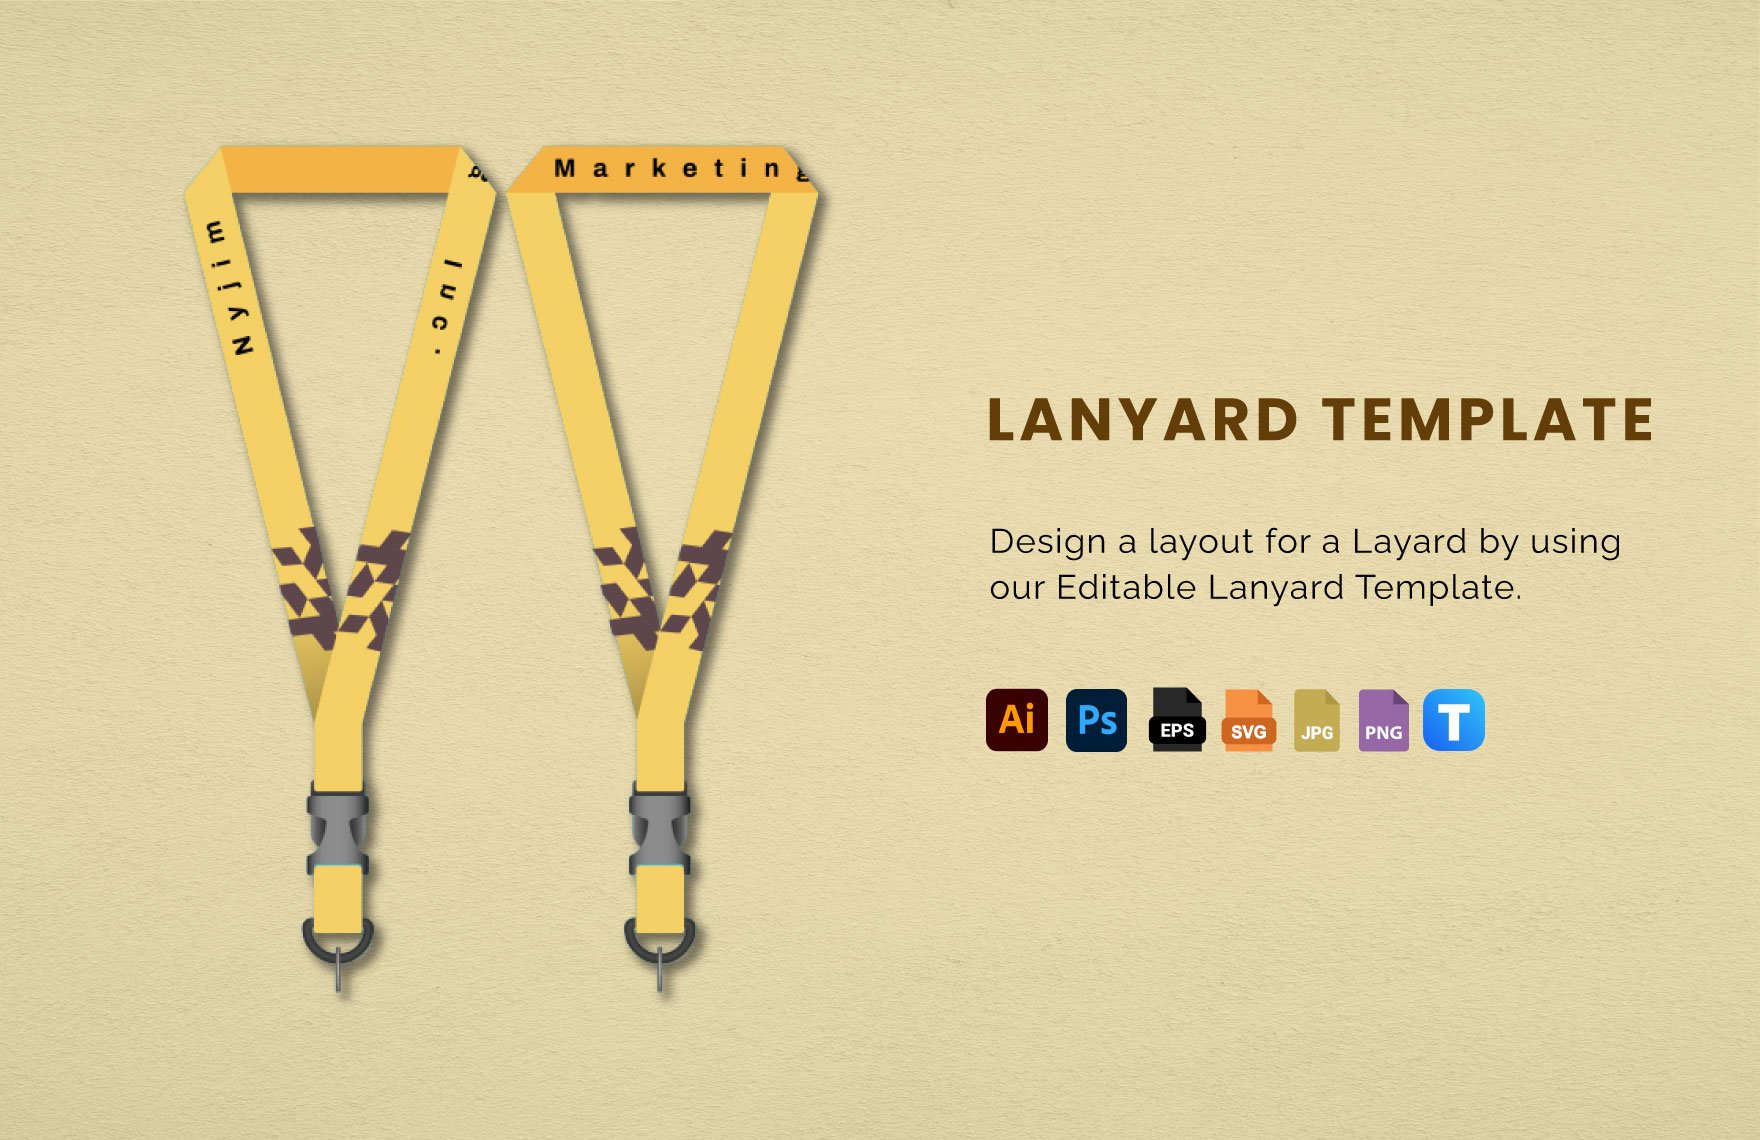 Free Lanyard Template in Illustrator, PSD, EPS, SVG, JPG, PNG